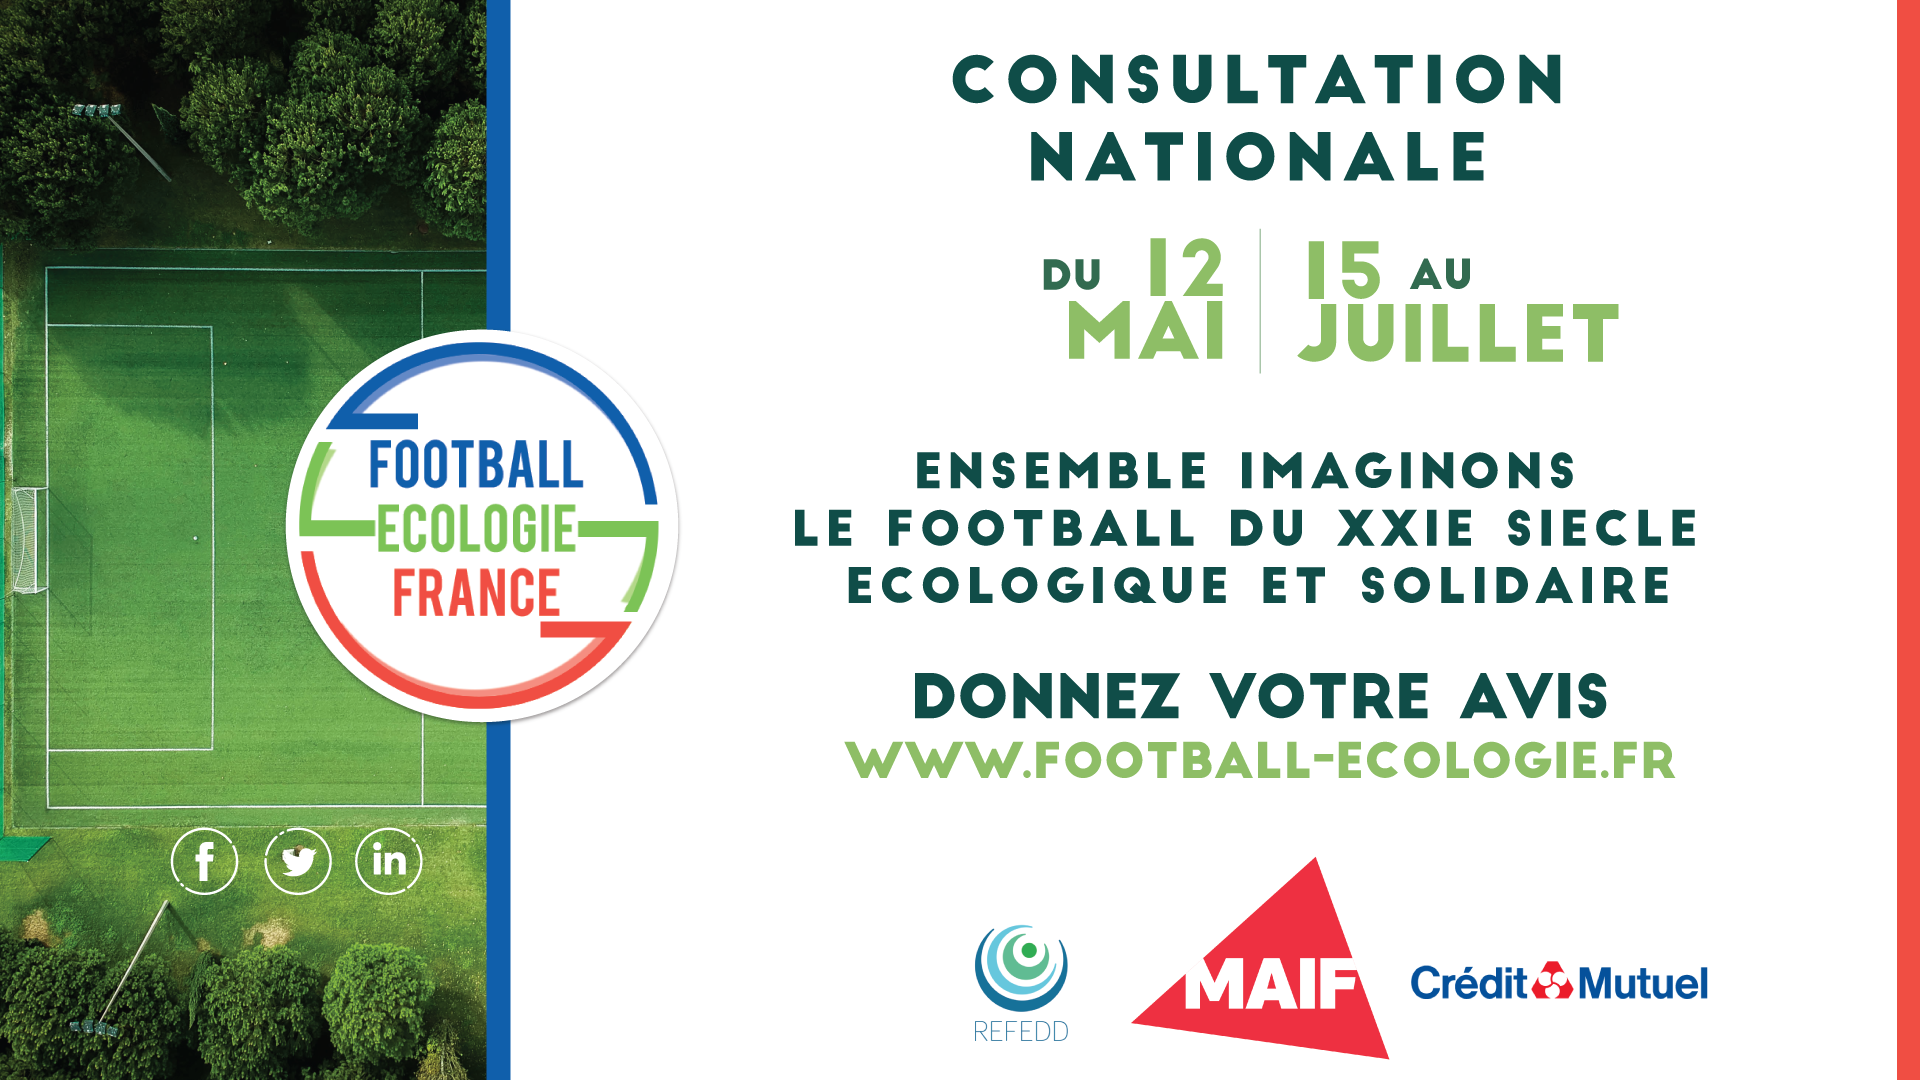 Football-Ecologie-France-Consultation-Ecolosport